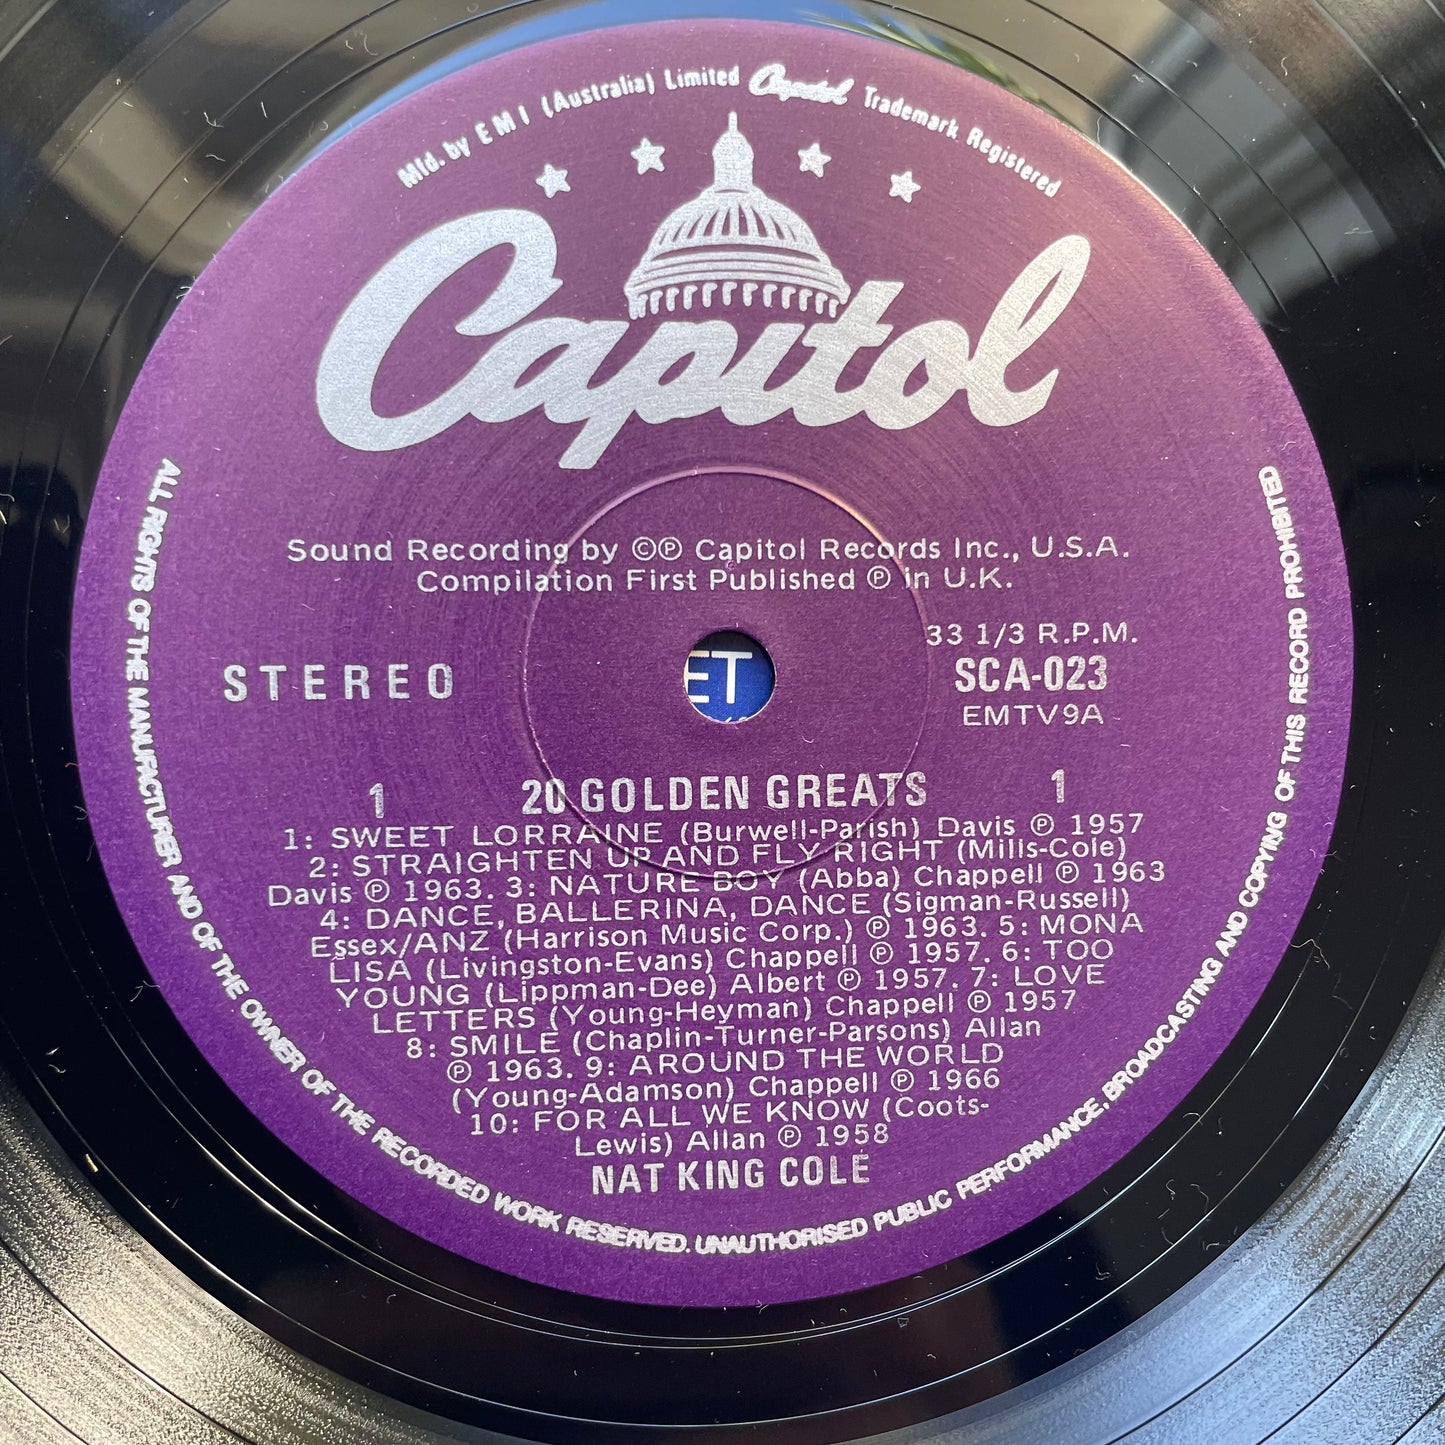 Vinyl Record LP Nat King Cole 20 Golden Greats 1978